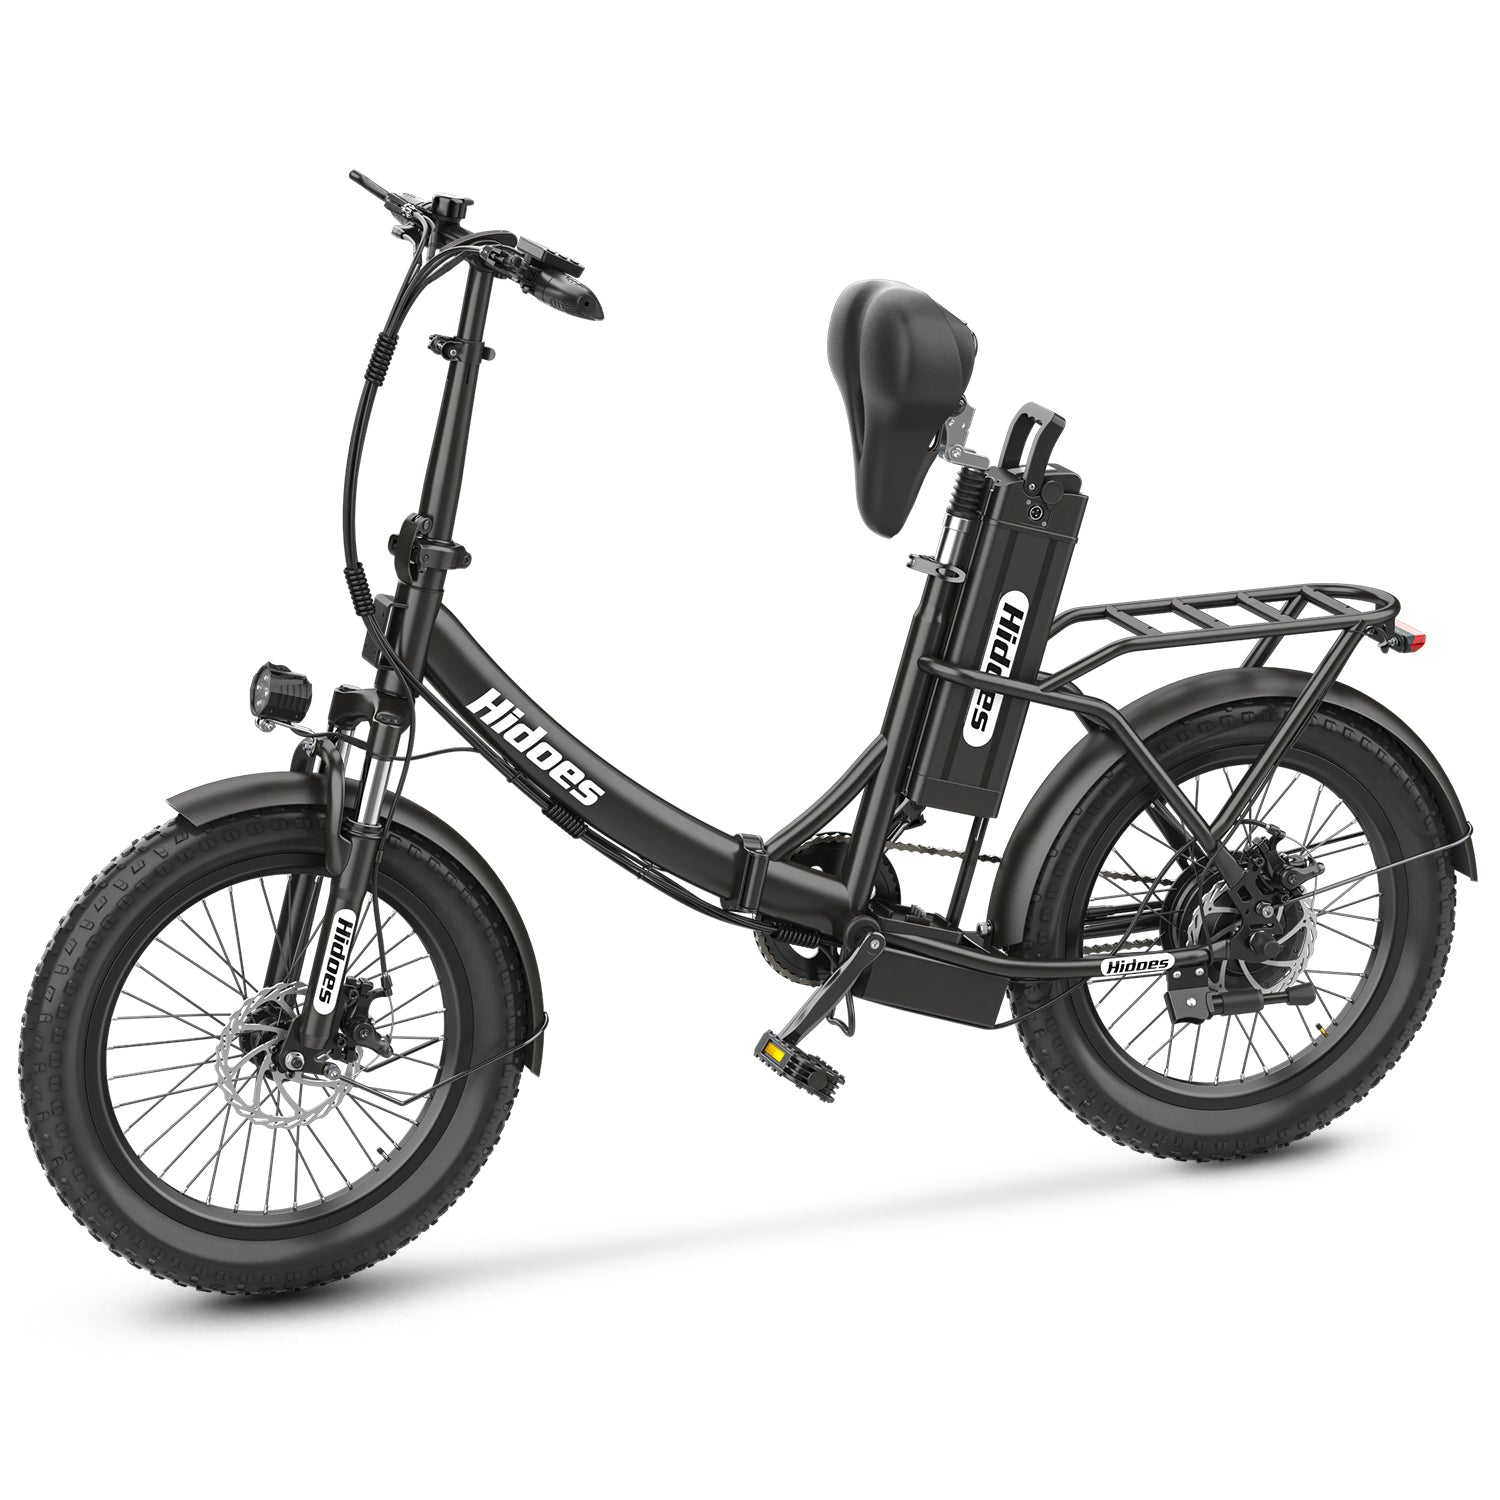 Hidoes C2 Folding electric bike for commuting